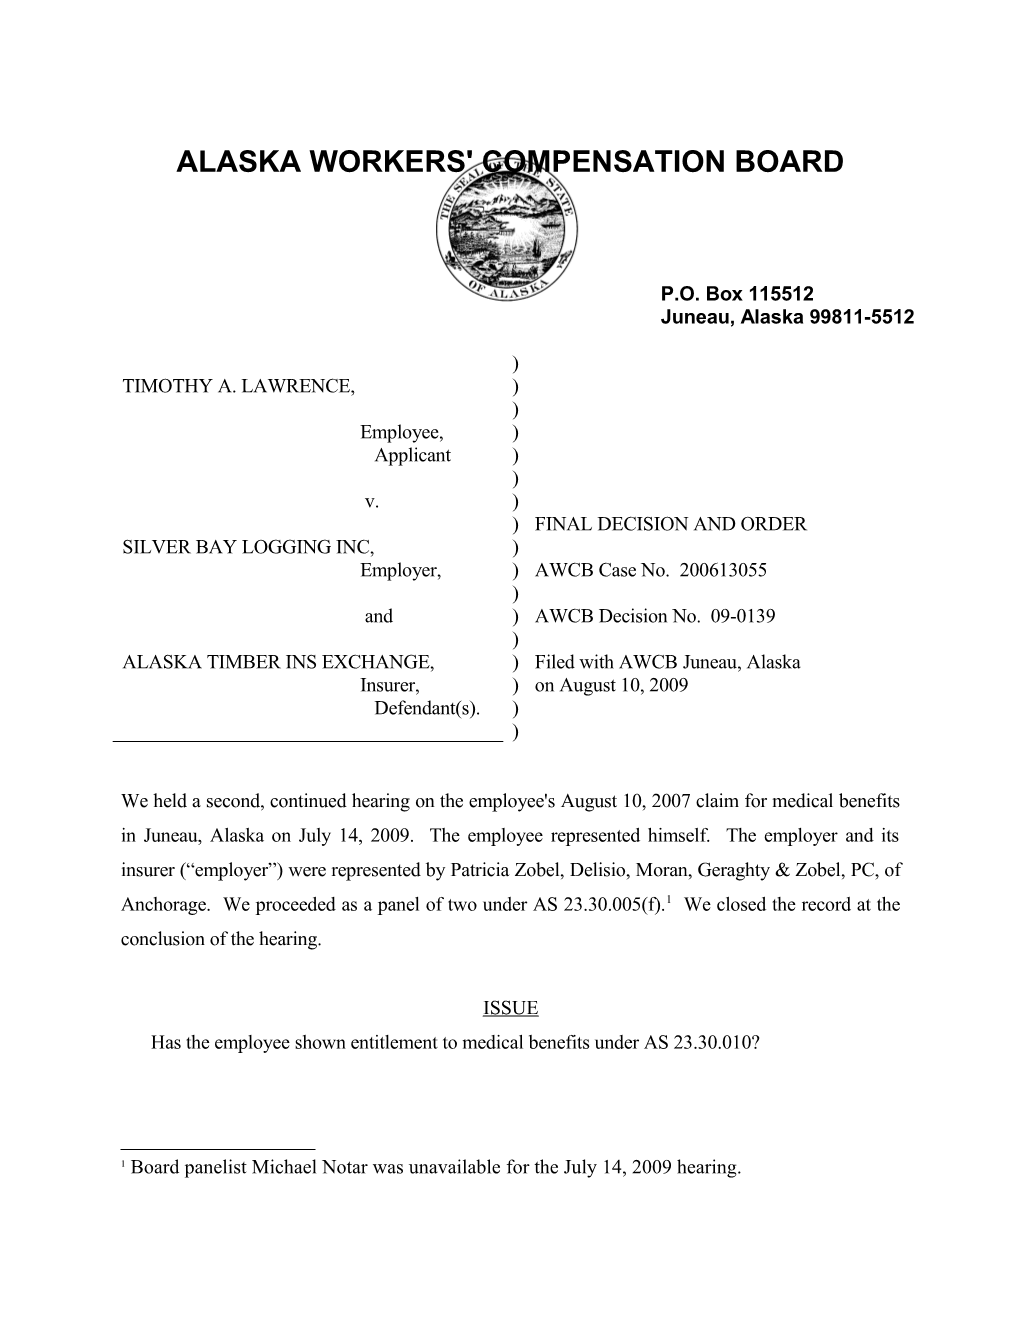 Alaska Workers' Compensation Board s20